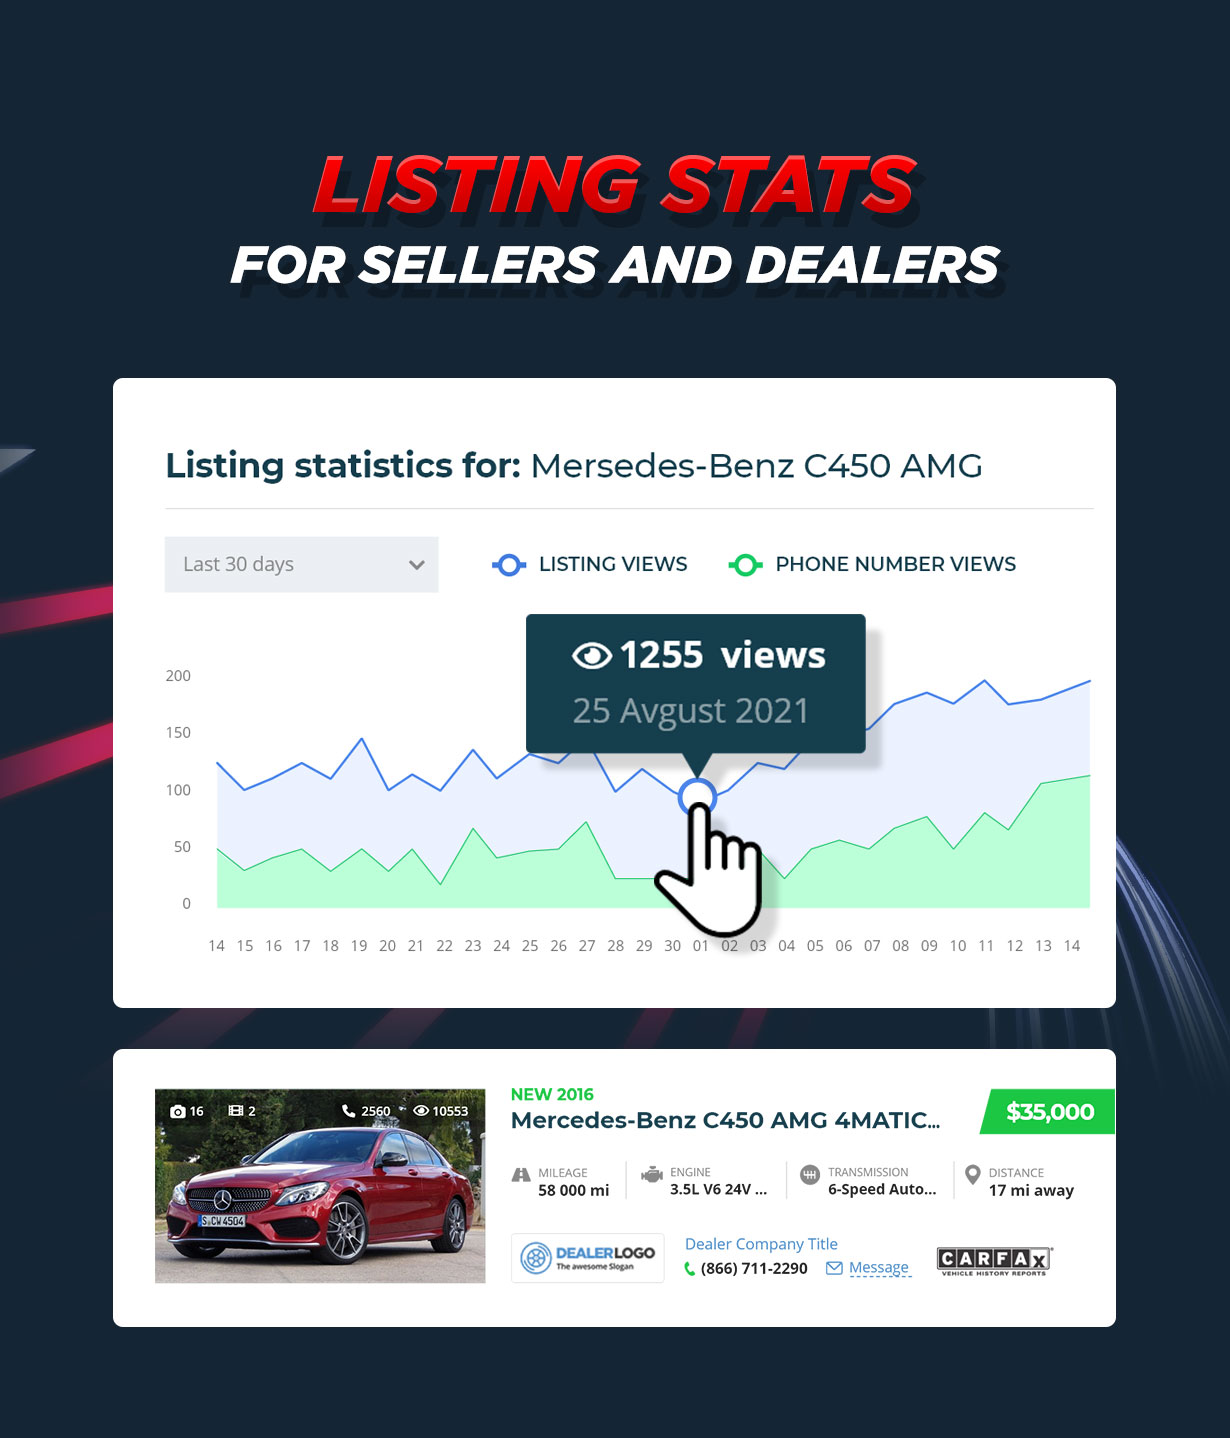 Motors - Car Dealer, Rental & Listing WordPress theme - 15